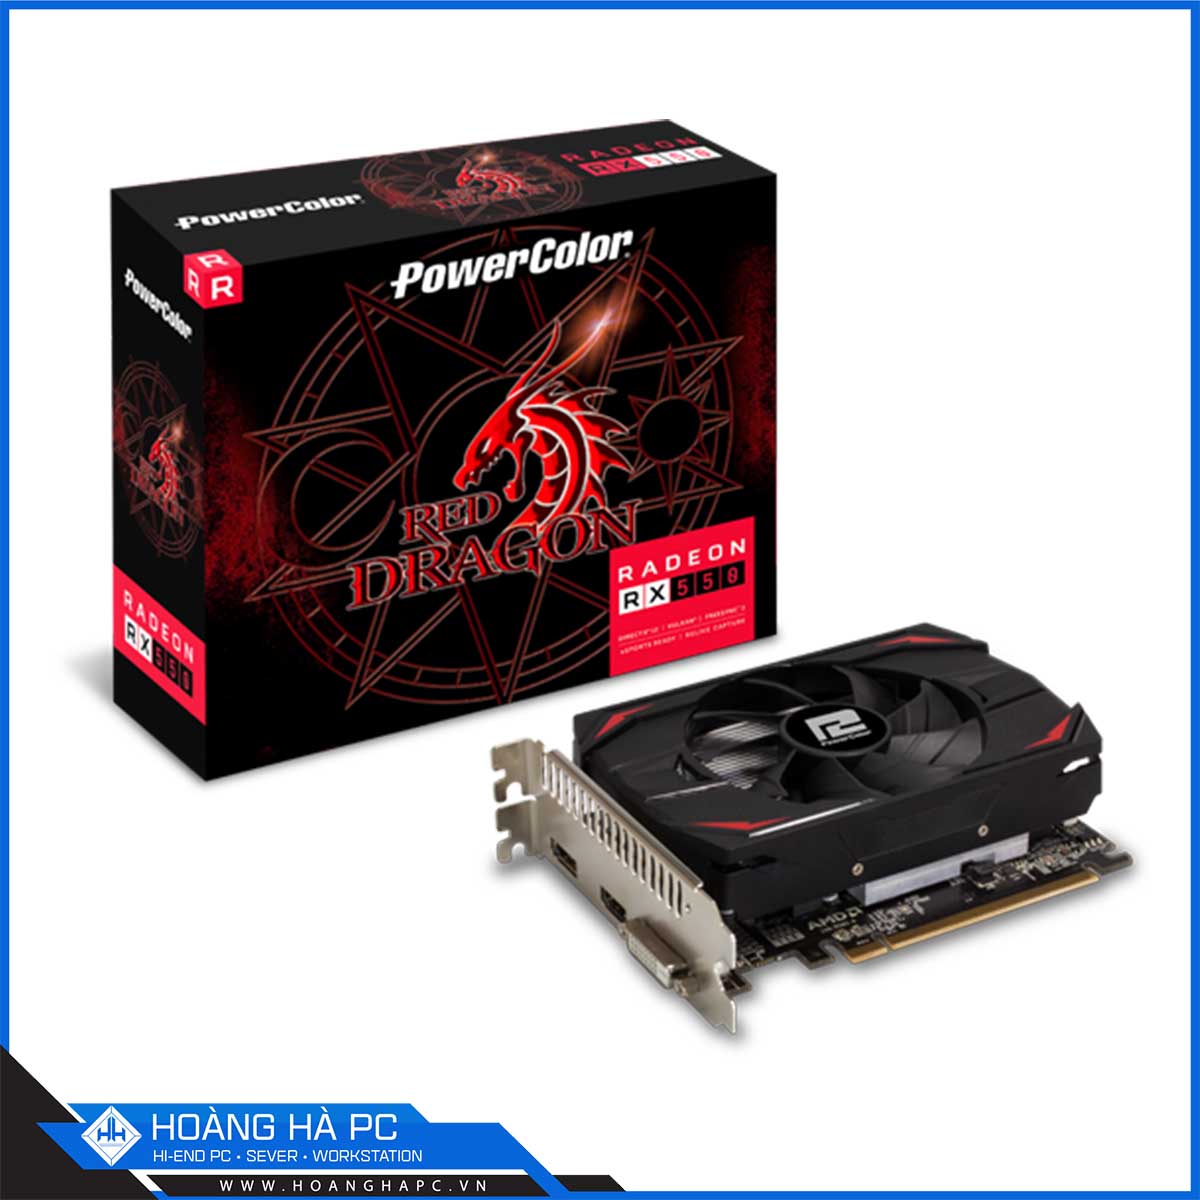 PowerColor Red Dragon Radeon RX 550 4GB